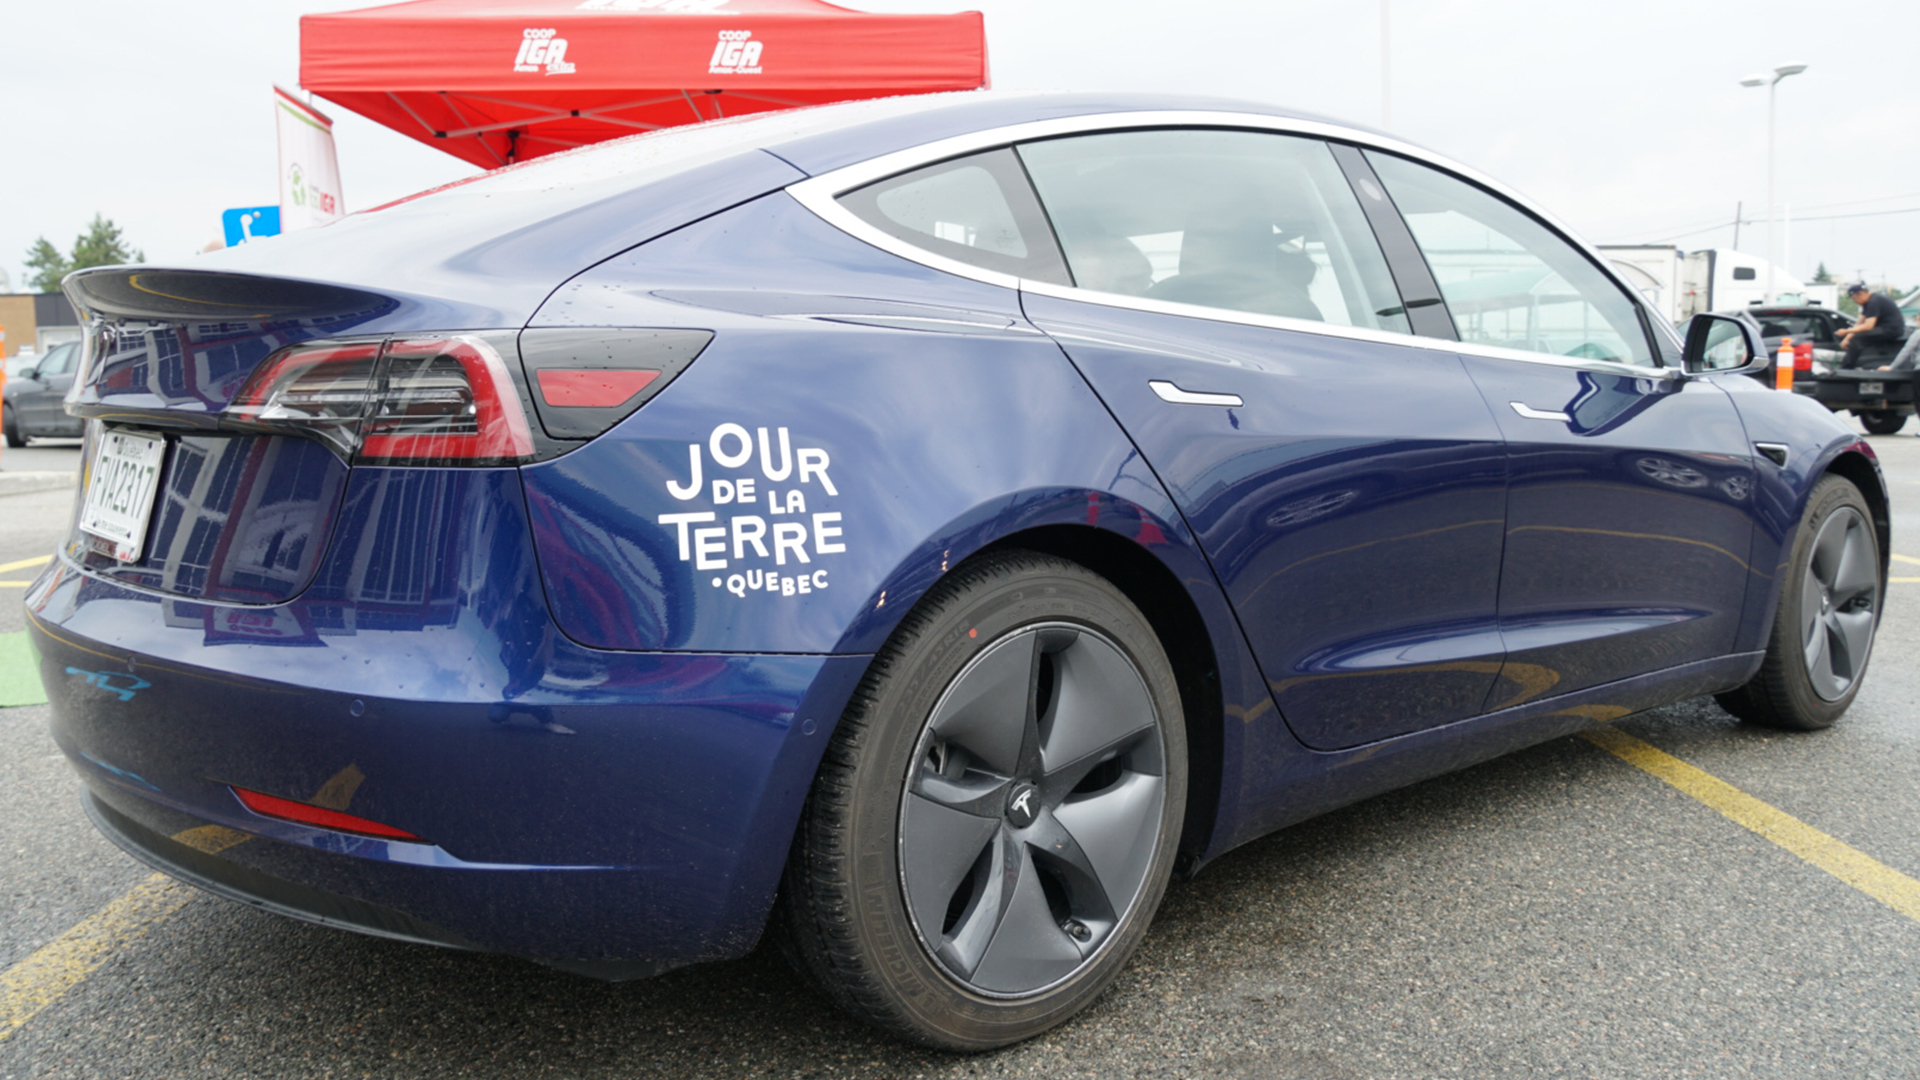 Road Trip Électrique à Bord de la Tesla Model 3 article 2 cover